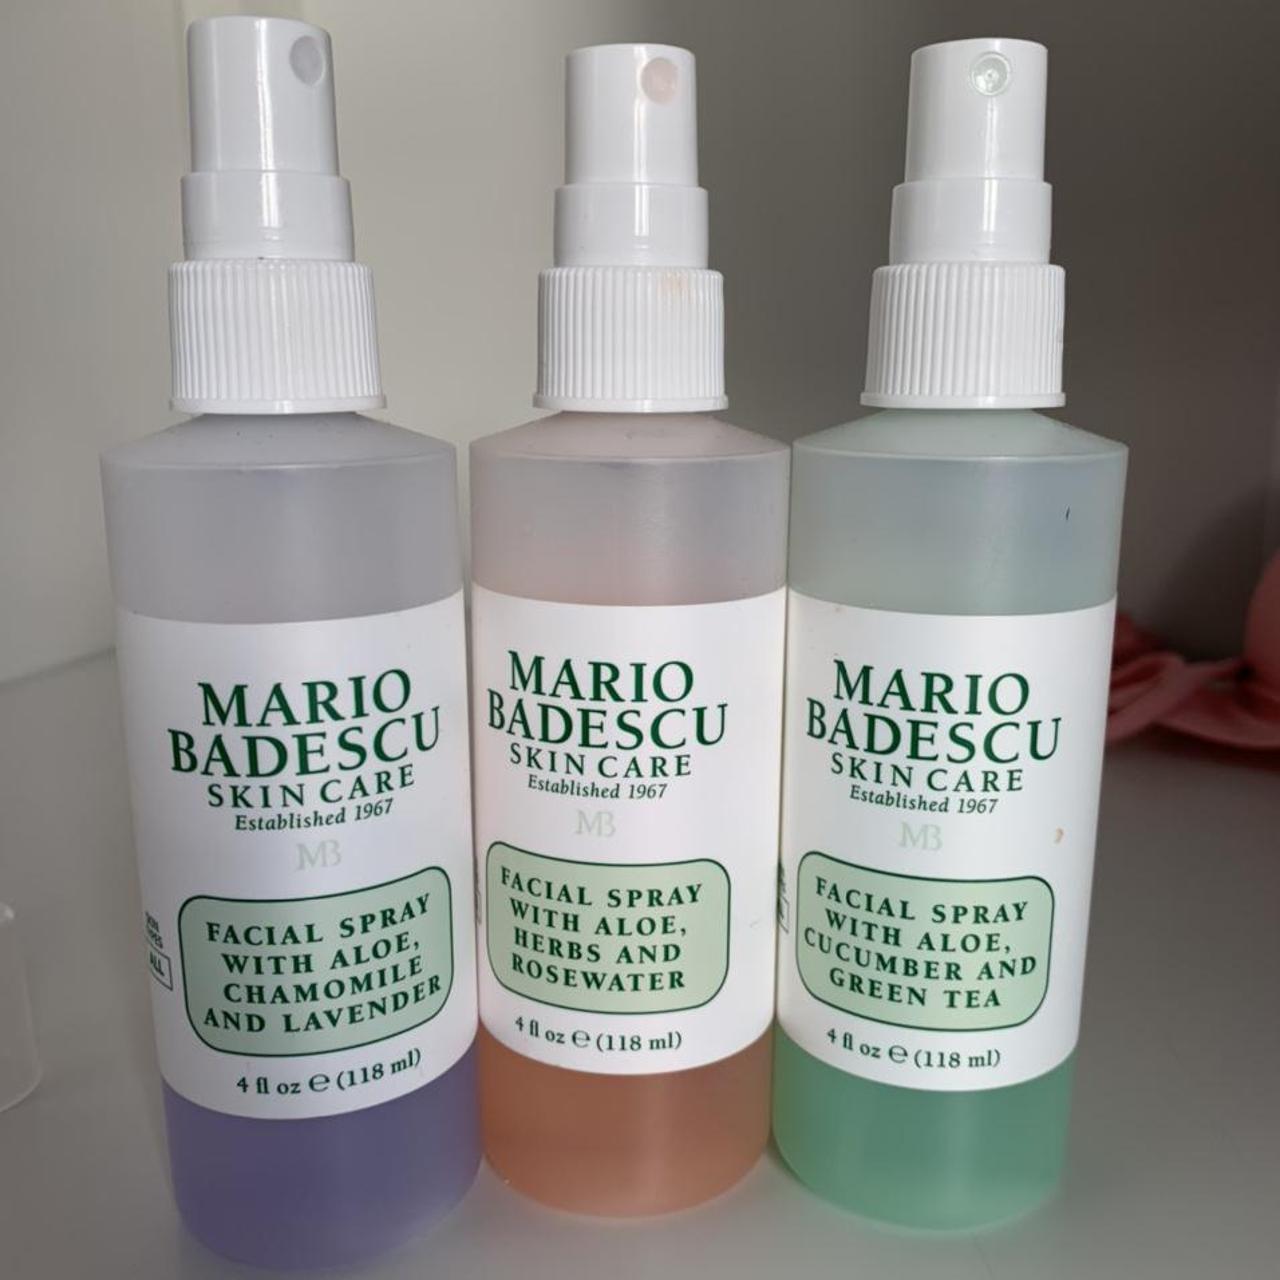 Product Image 2 - 3 mario badescu sprays
all hardly